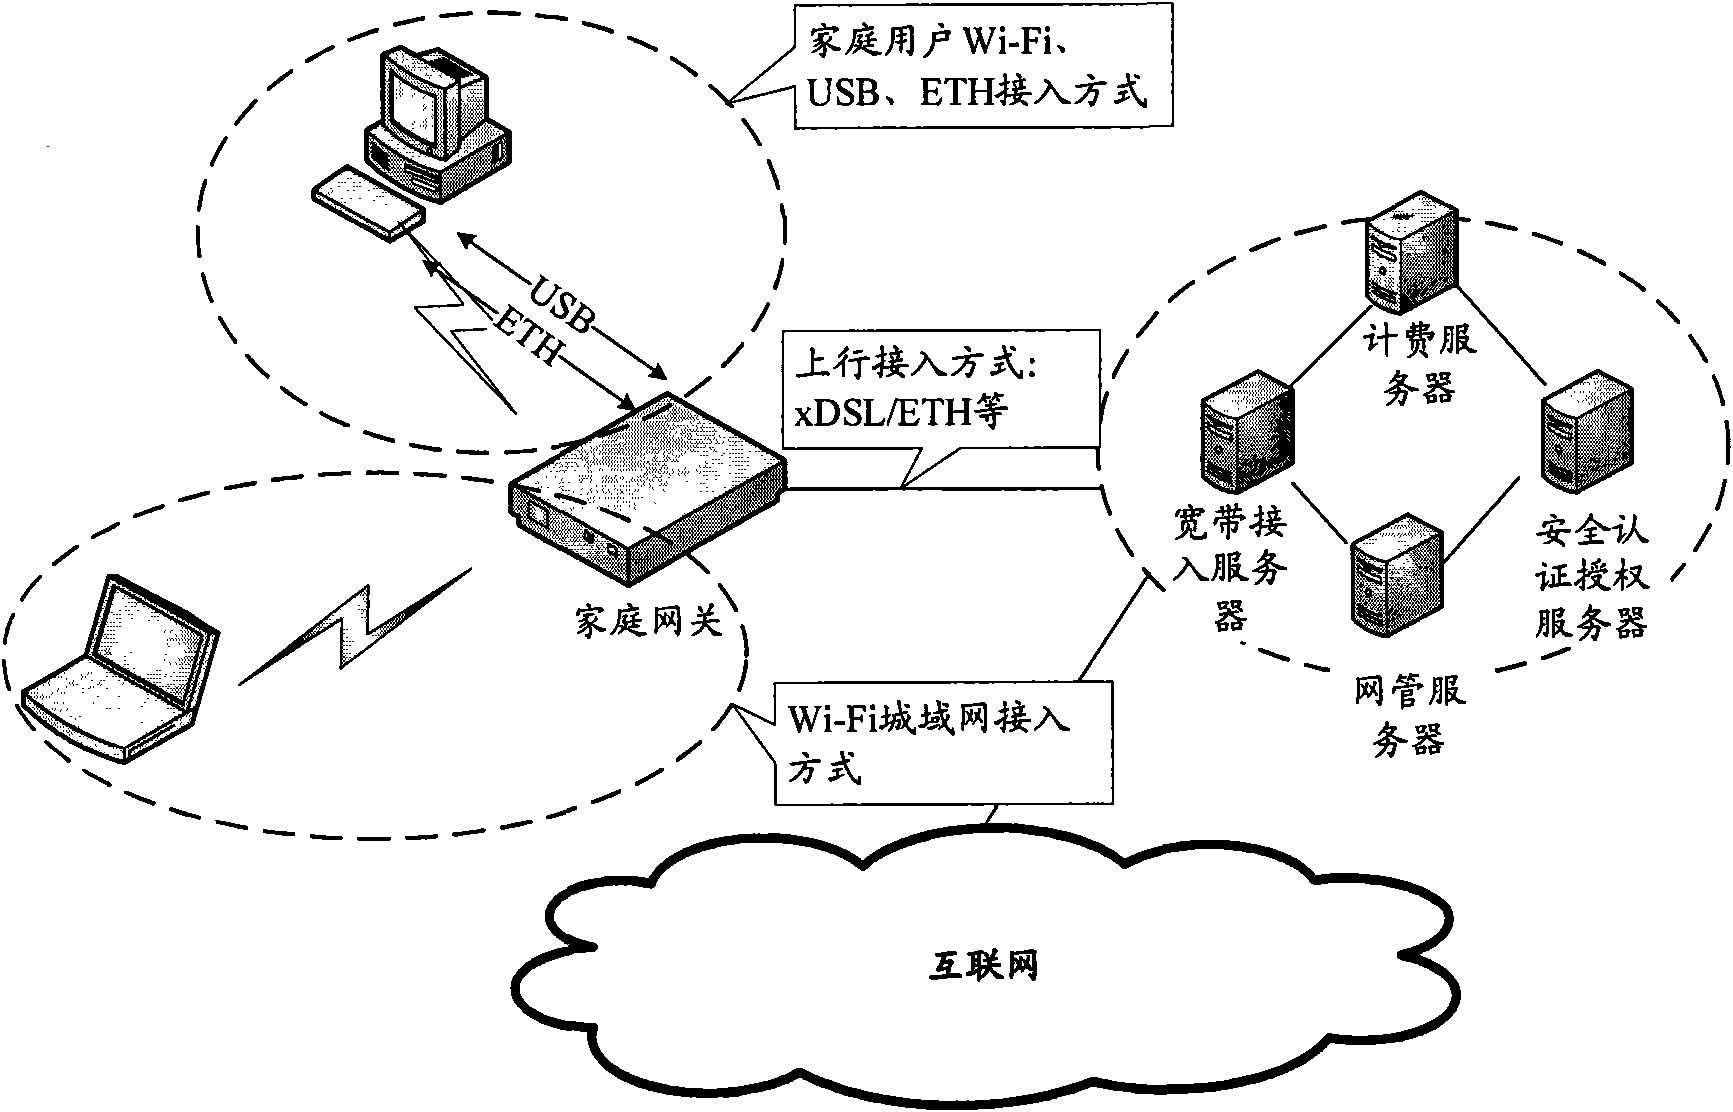 Realization method of Wi-Fi metropolitan area network and home gateway